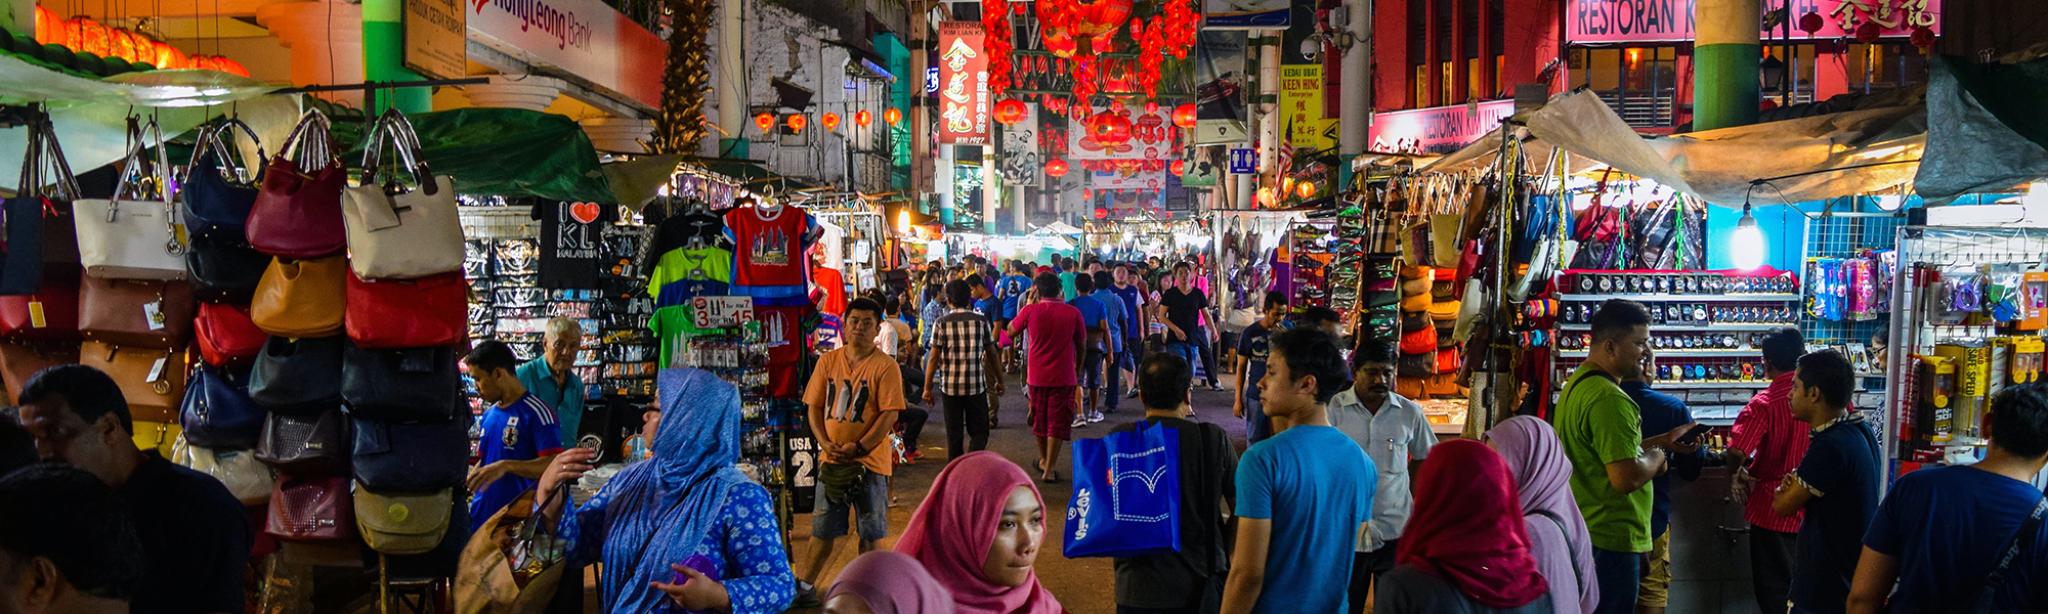 Crowded Malaysian market street